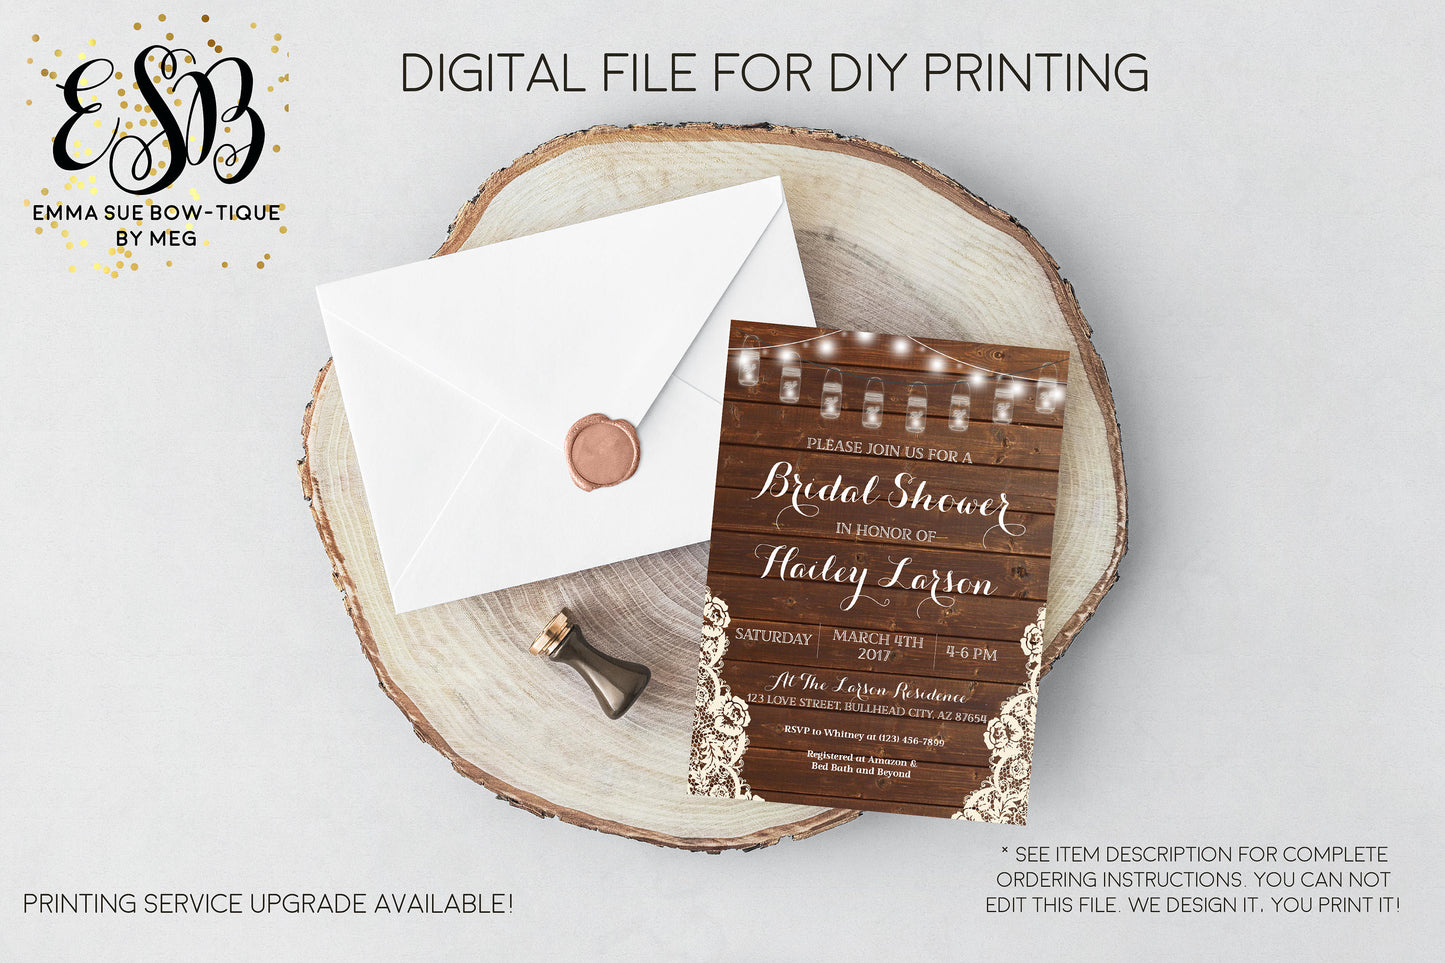 Bridal Shower Invitation- Rustic Country Stringed Lights with Mason Jar Dark Wood Background with Lace - Digital File Printable (bridal-Mason)